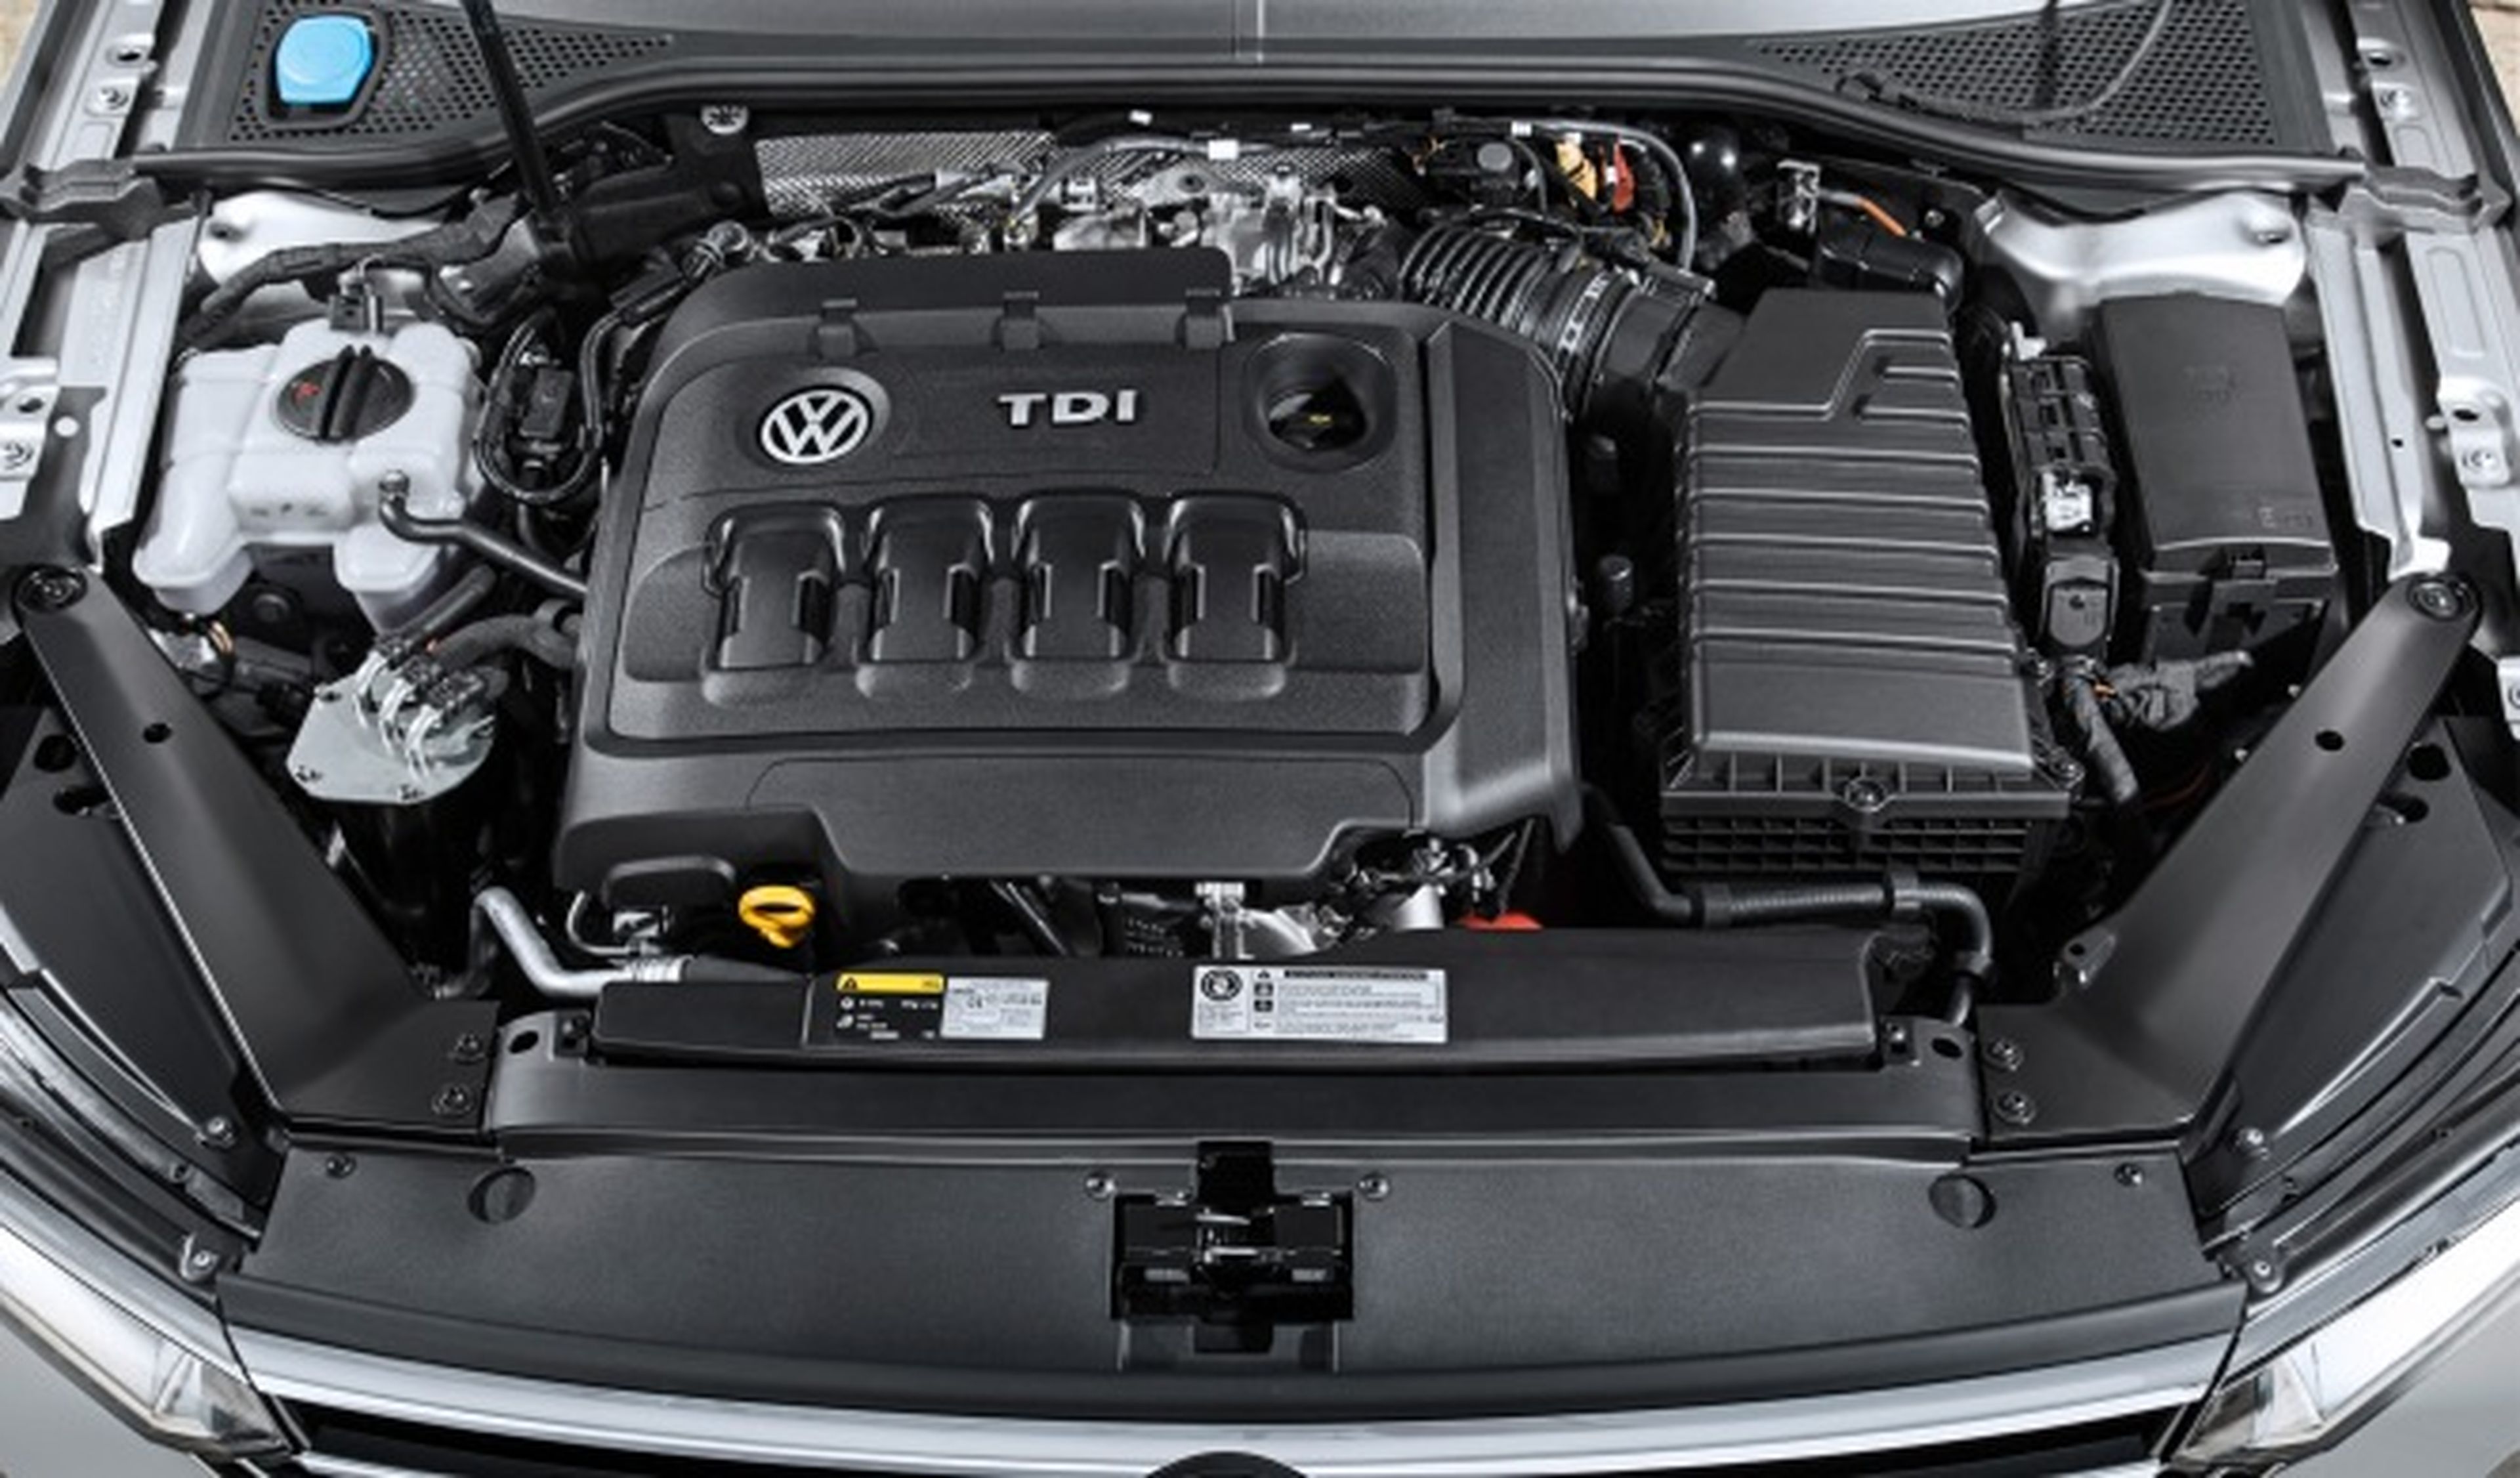 Aprobada la solución técnica de VW para un modelo trucado